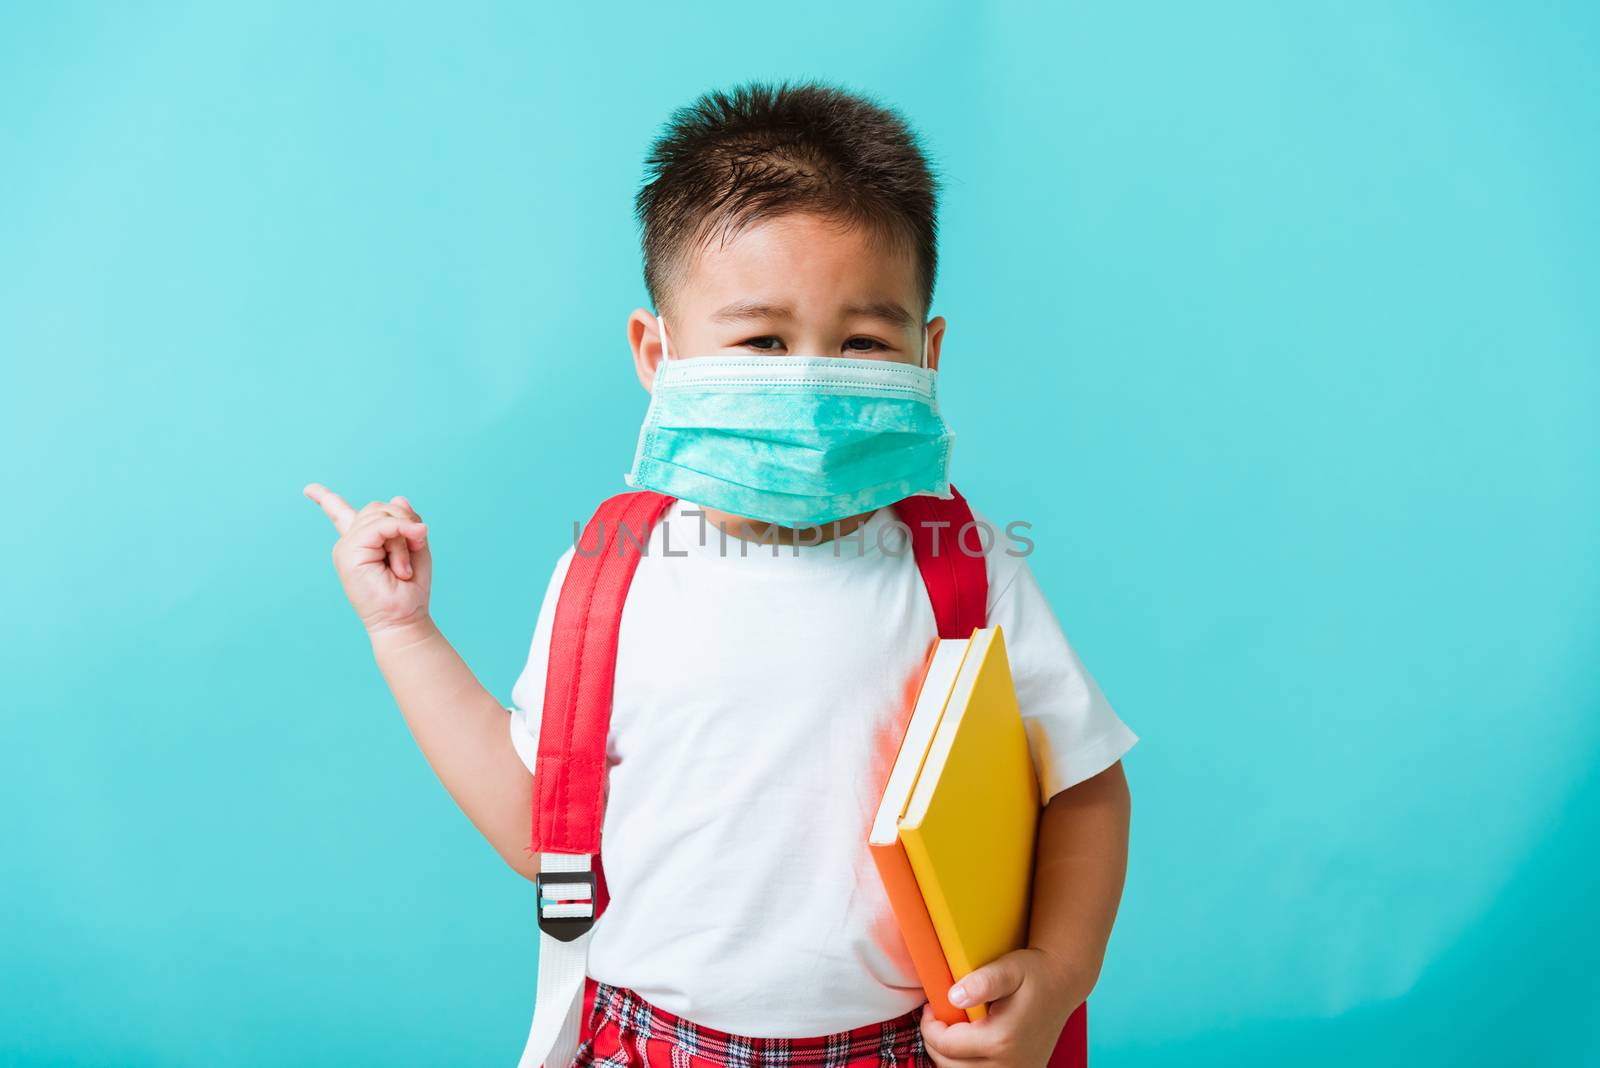 child boy kindergarten wear face mask protective and school bag  by Sorapop